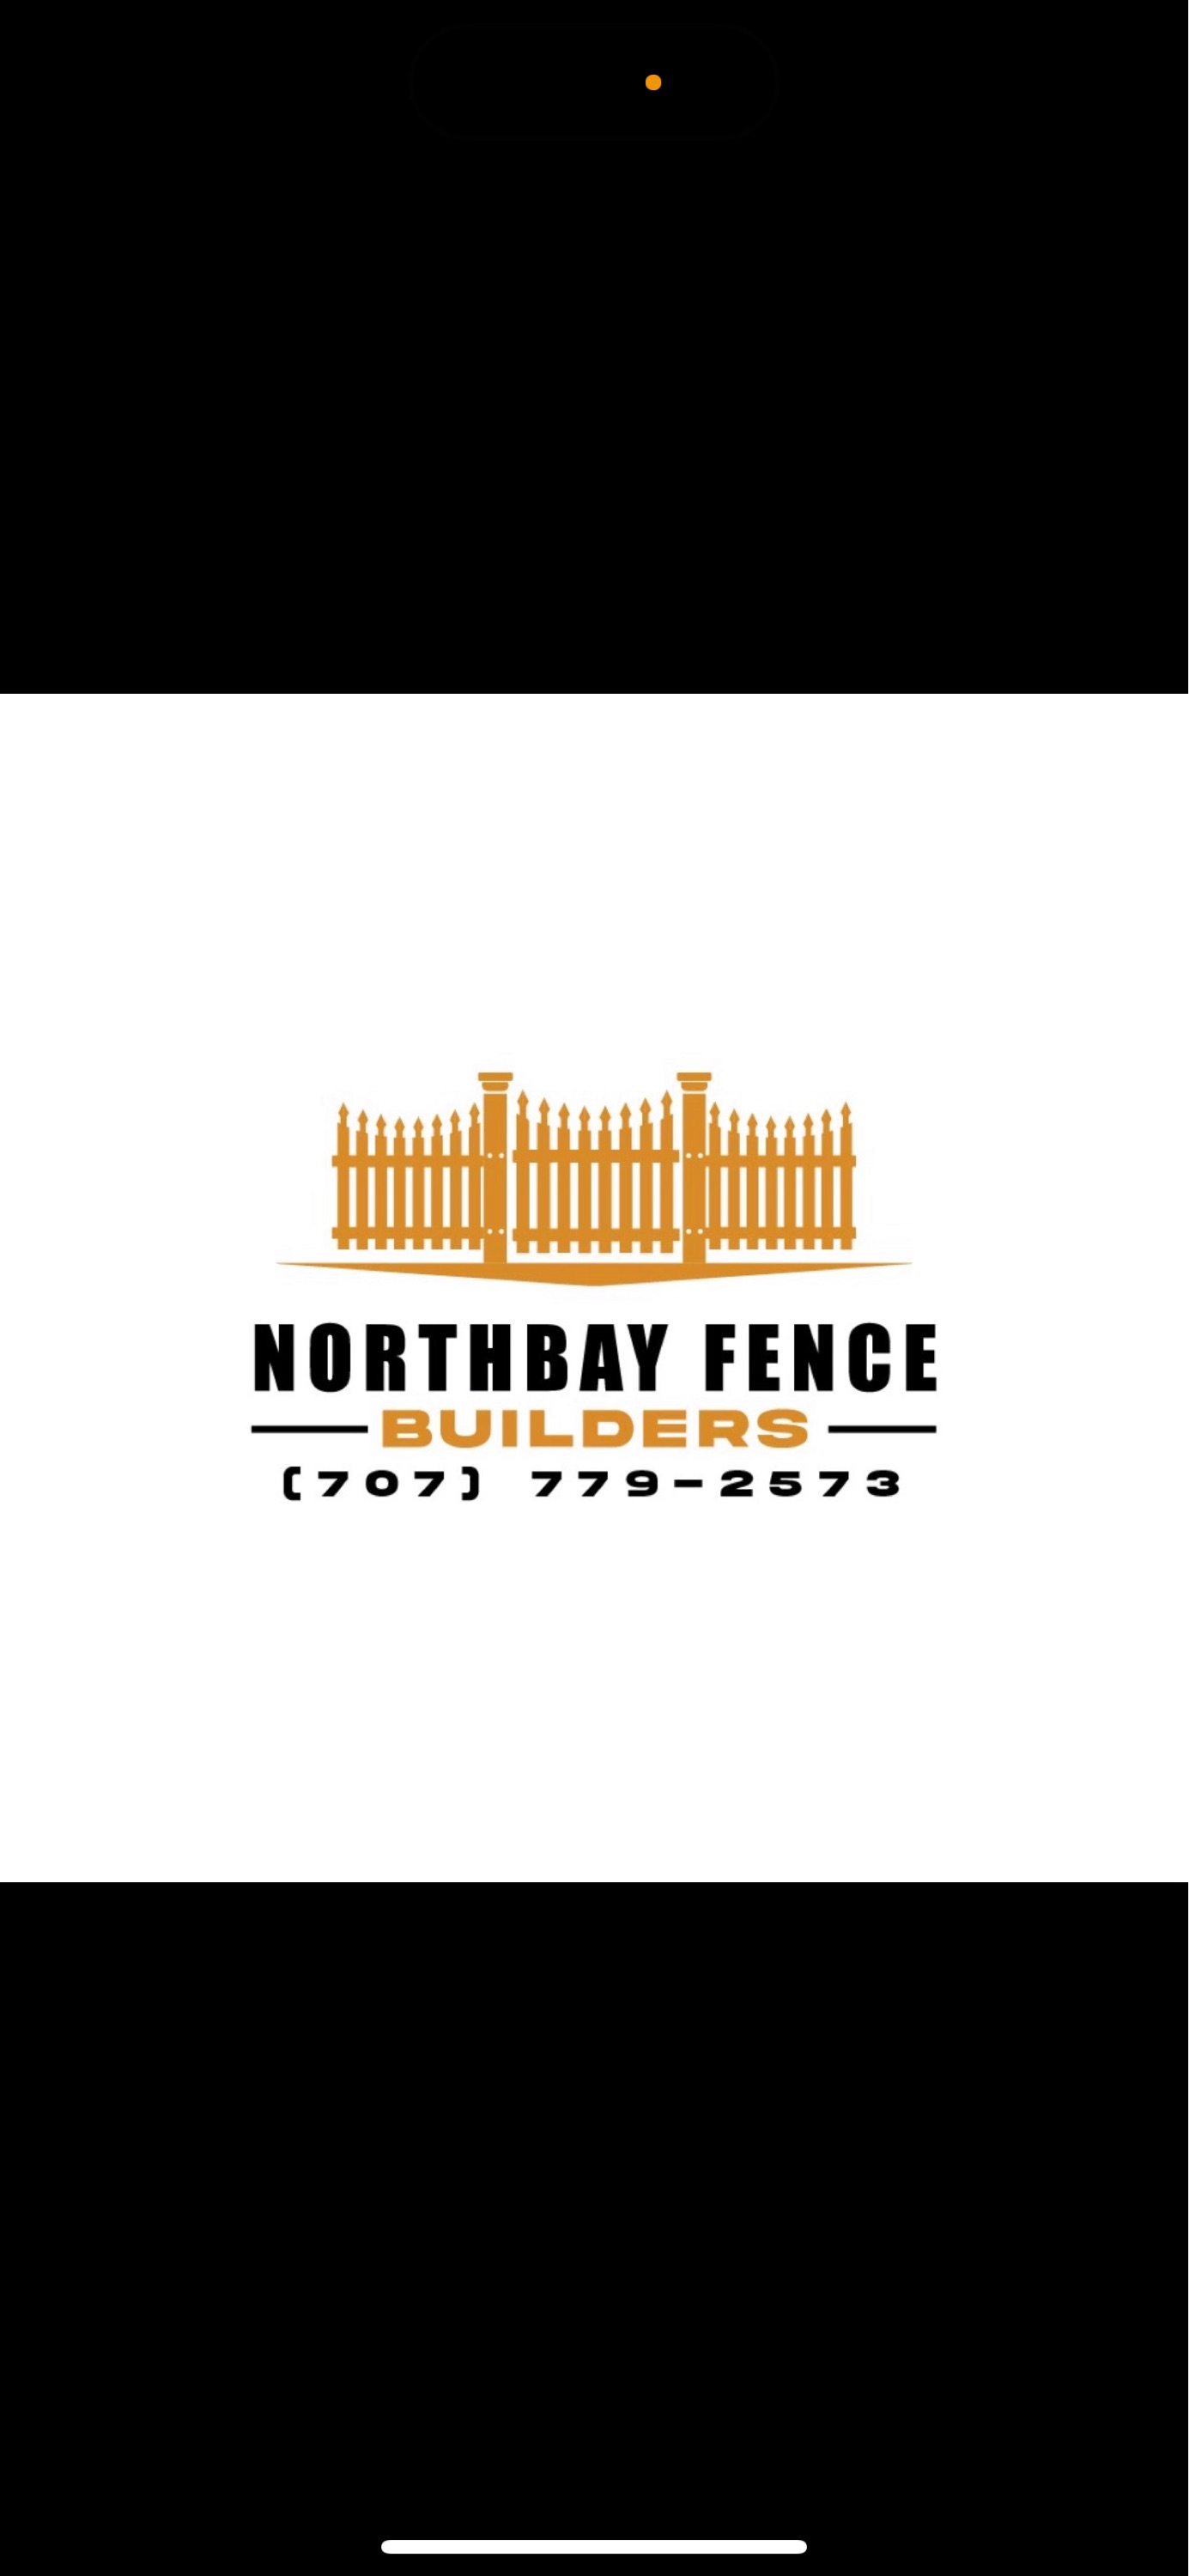 Northface Fence Builders - Unlicensed Contractor Logo